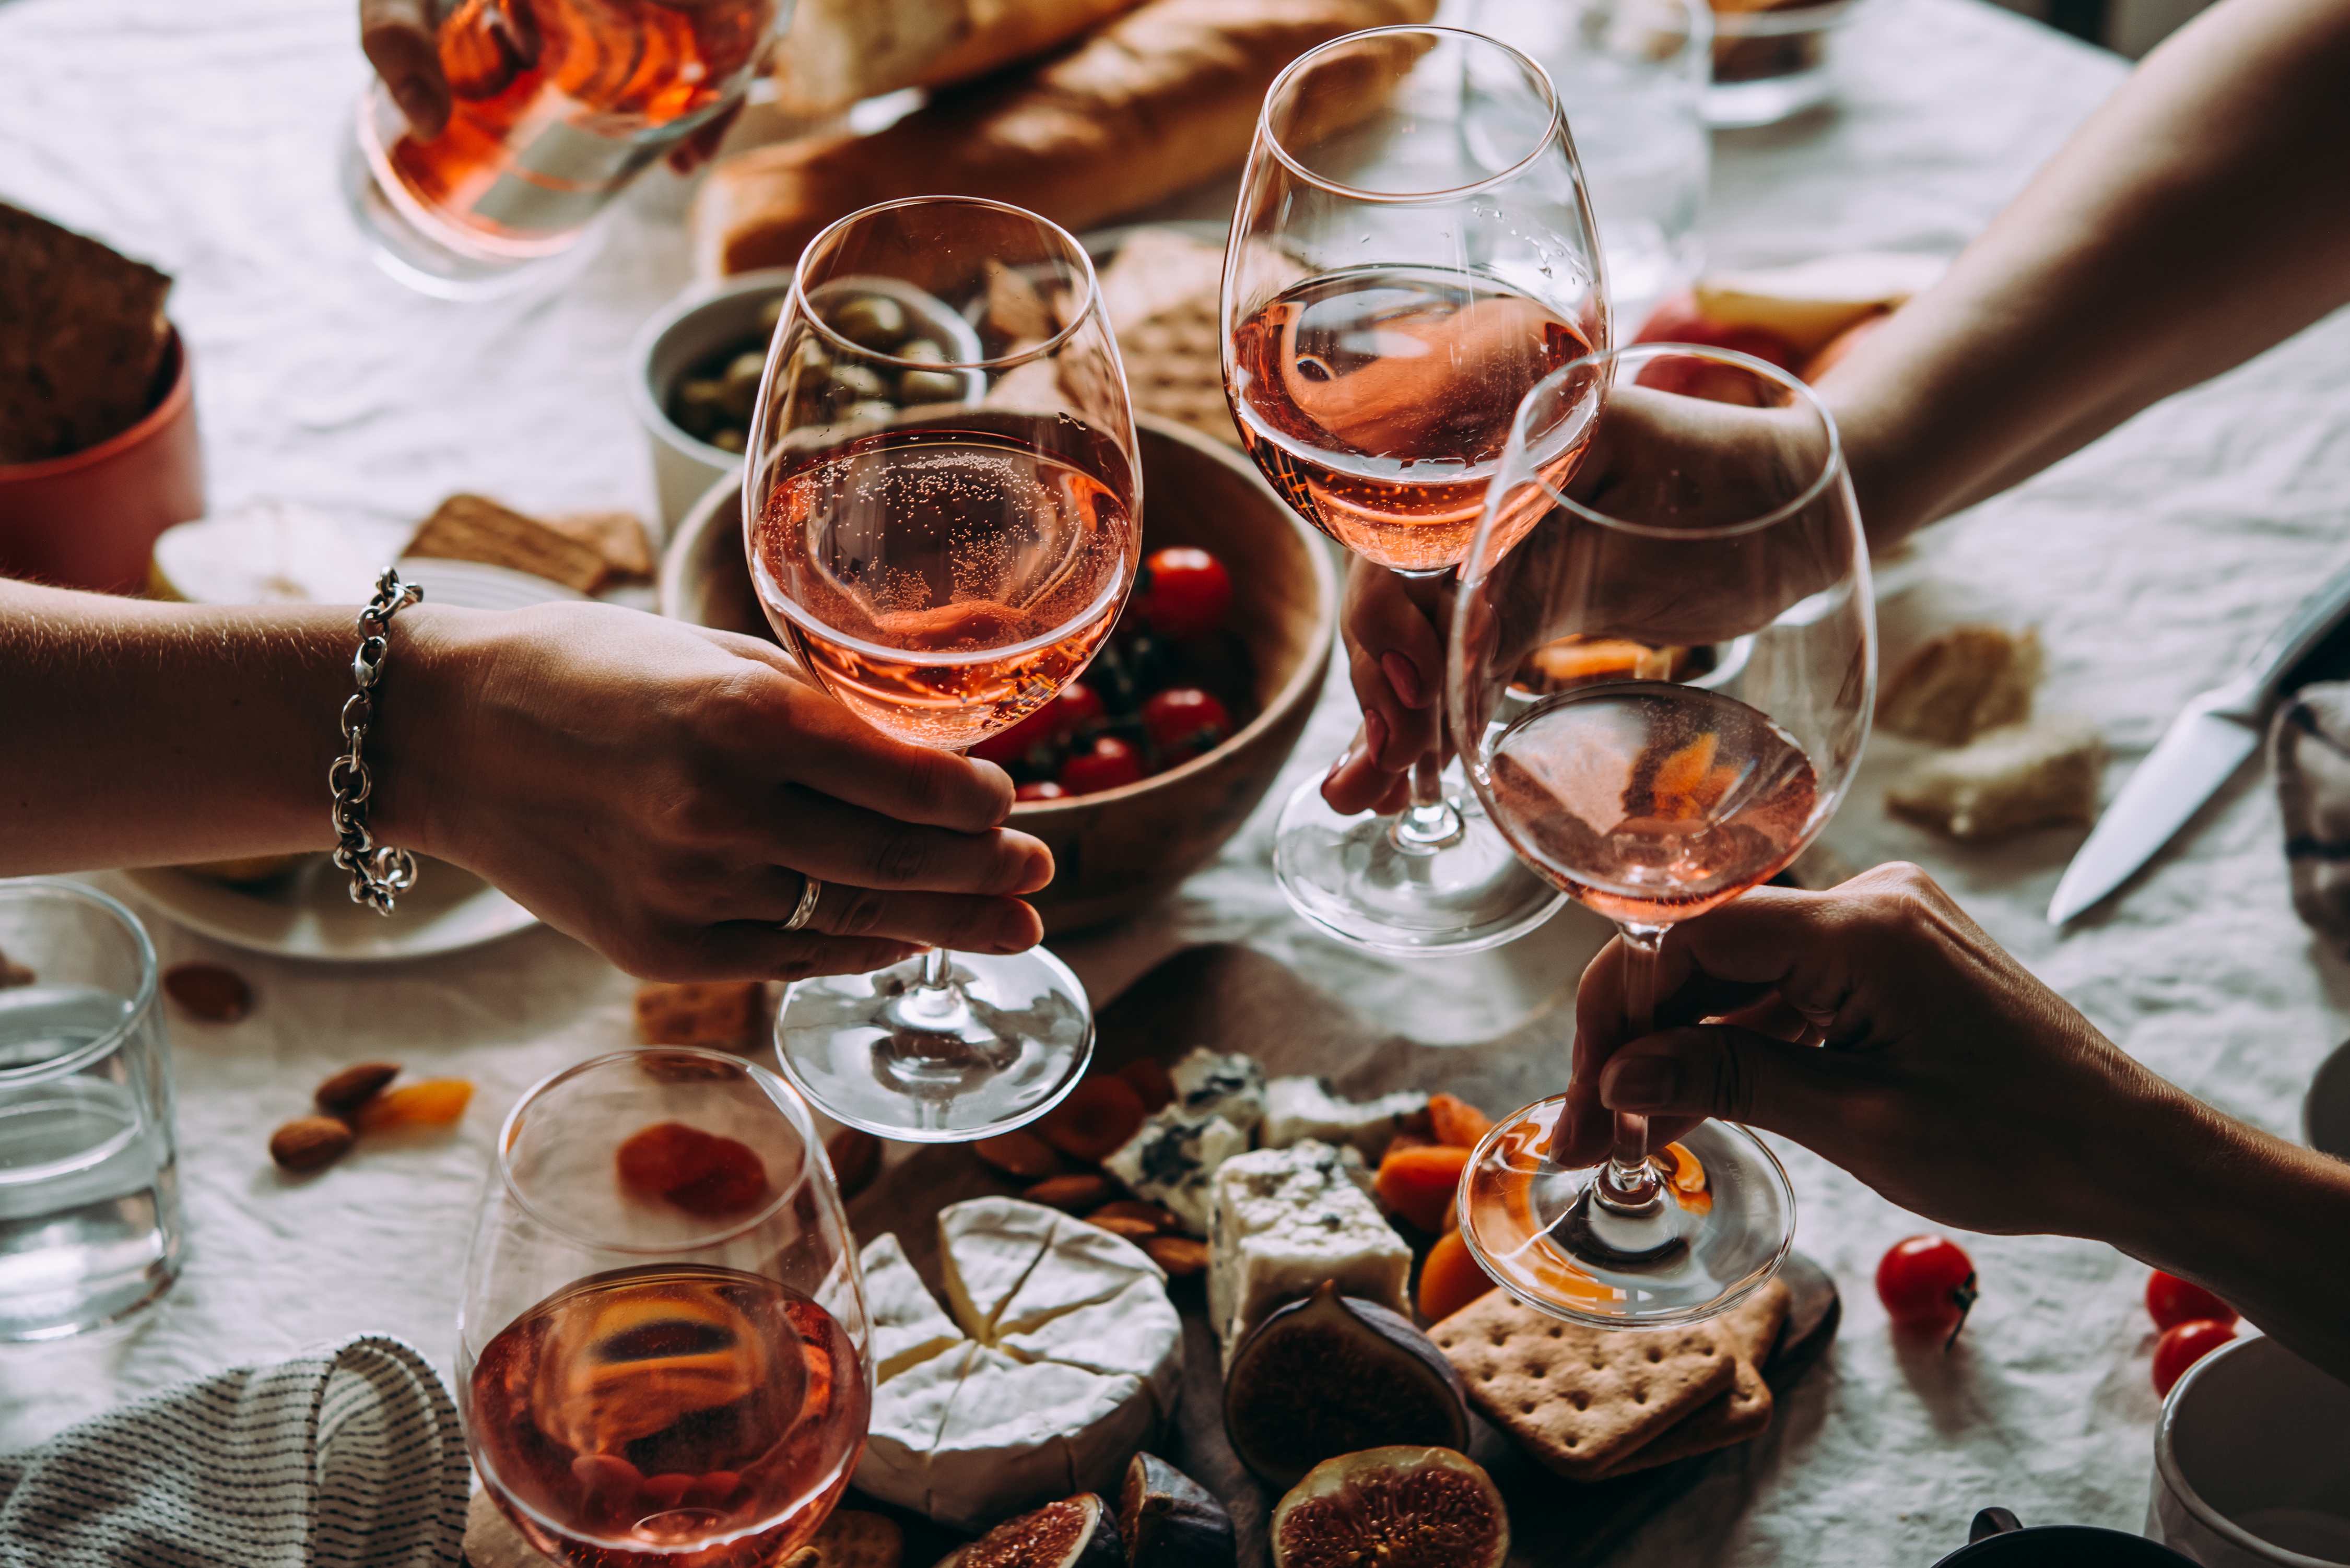 Glasses of rose wine | Source: Shutterstock